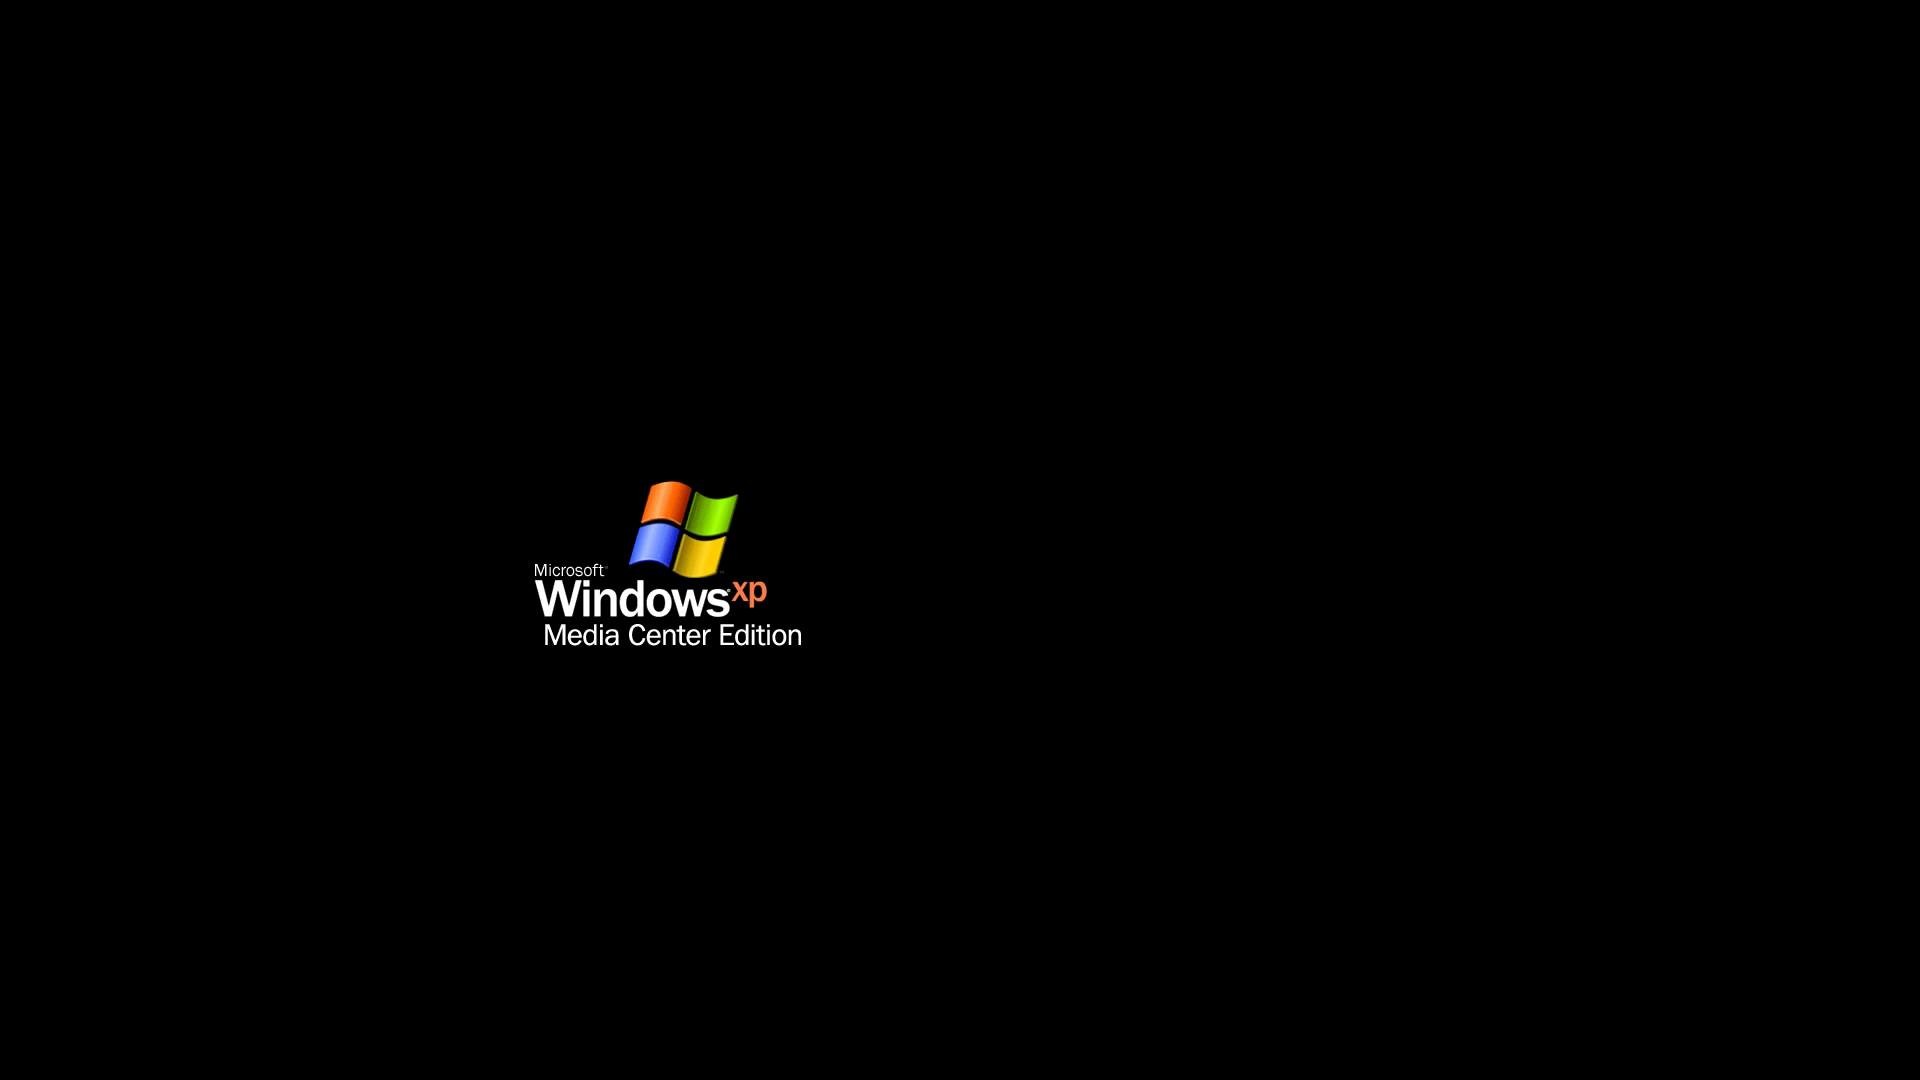 Сайт старых виндовс. Экран загрузки виндовс 7. Экран загрузки виндовс хр. Загрузка виндовс XP. Виндовс хр загрузочный экран.